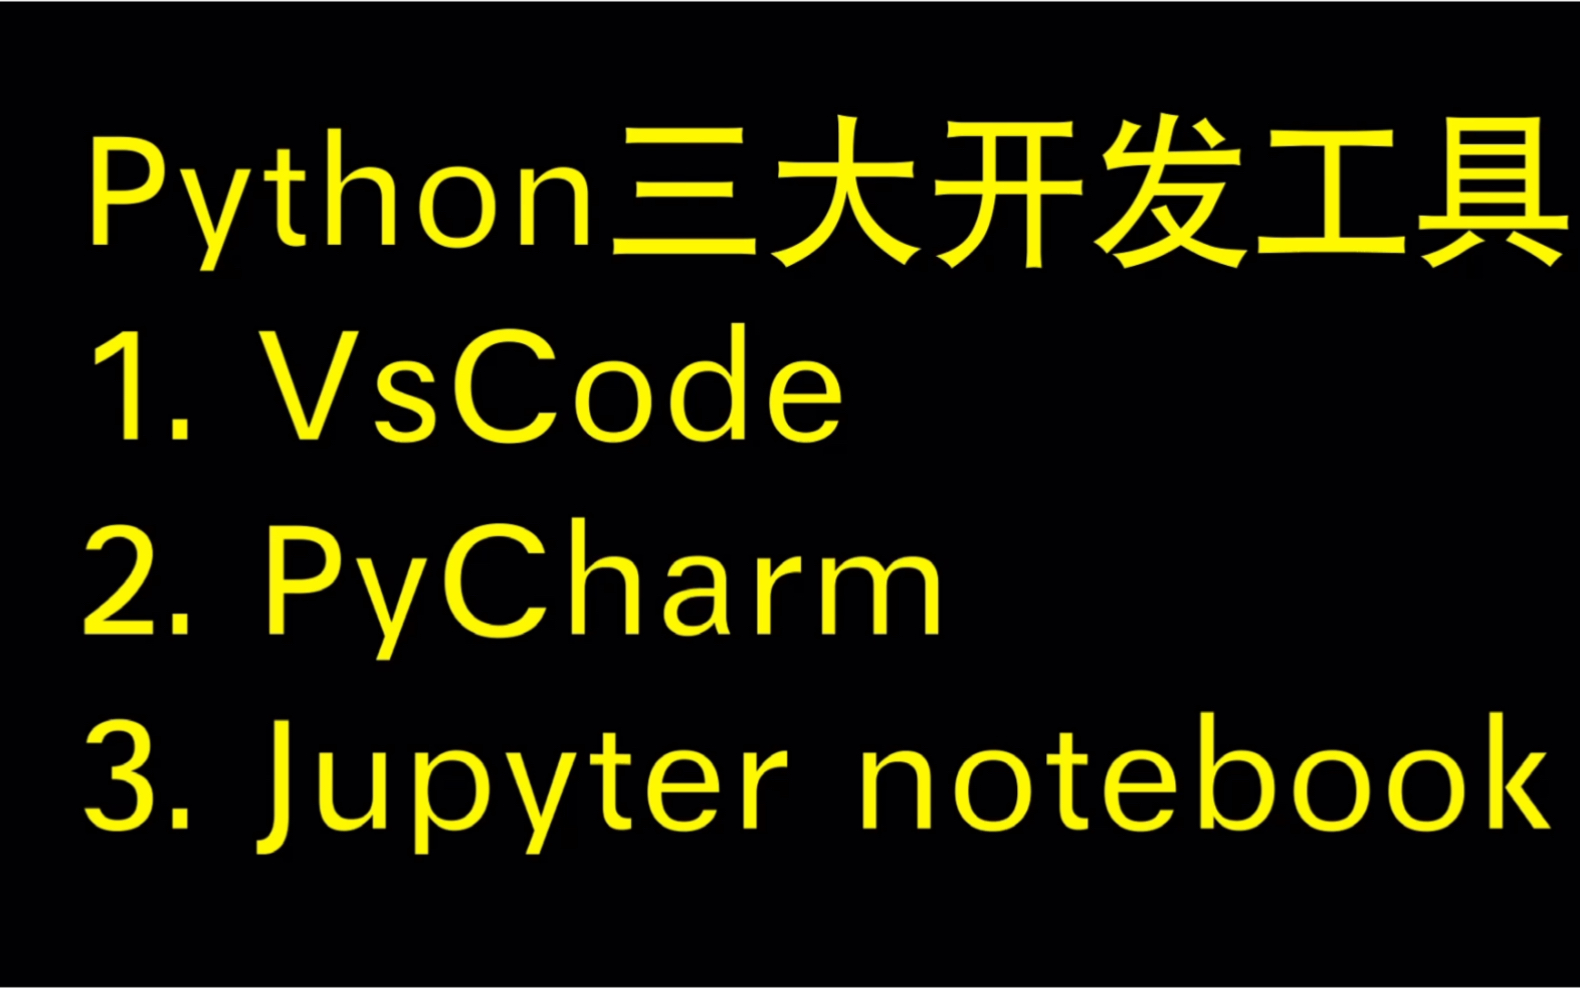 Python三大开发工具，Vscode、Pycharm、Jupyter notebook